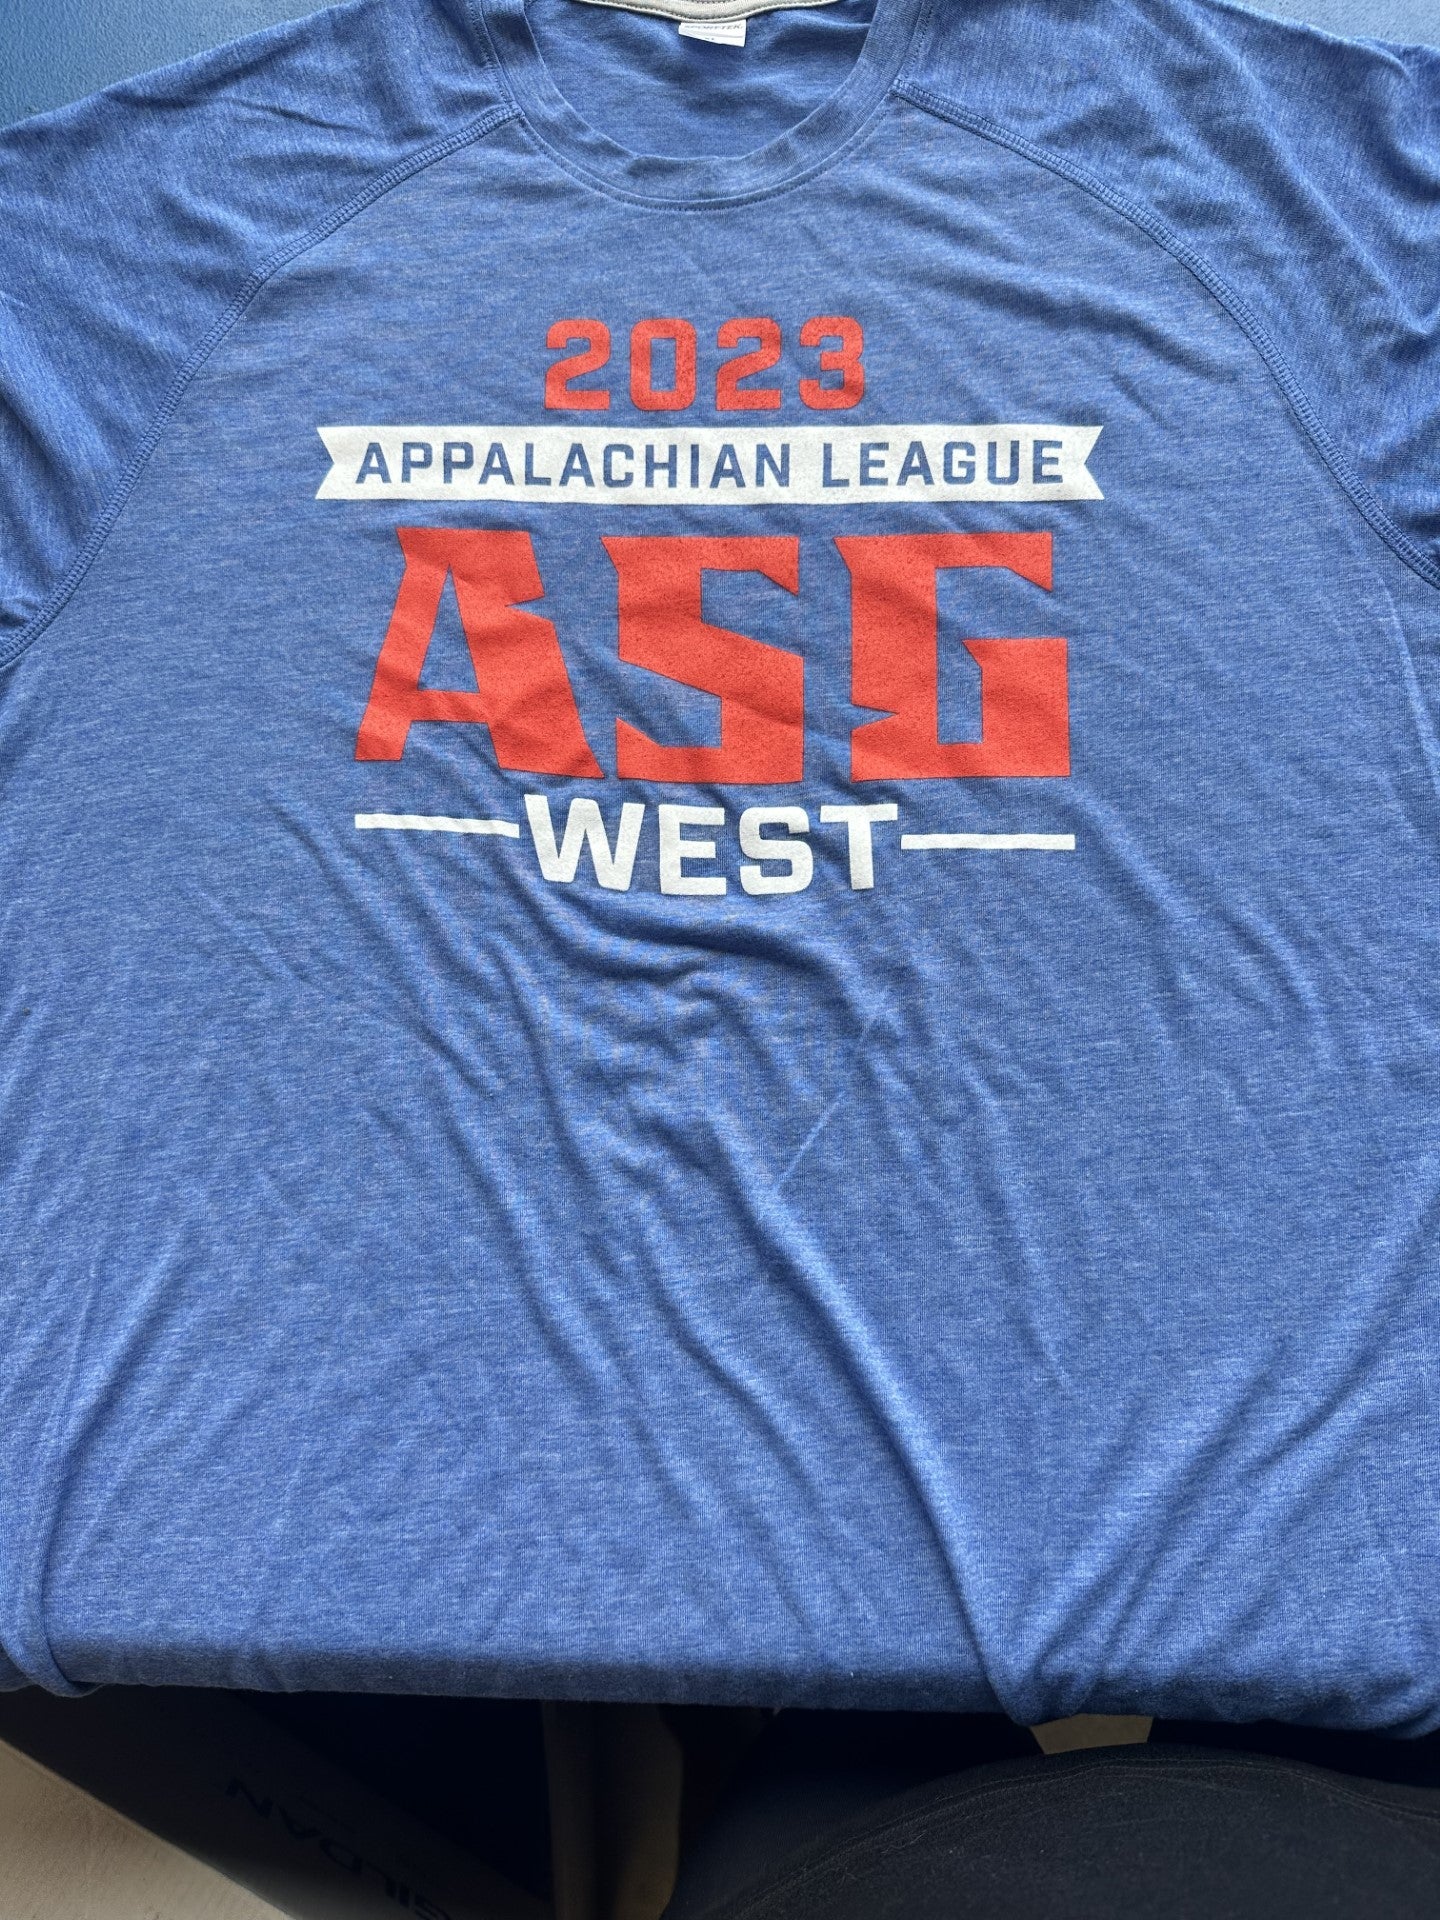 2023 Appalachian League West Division Tee